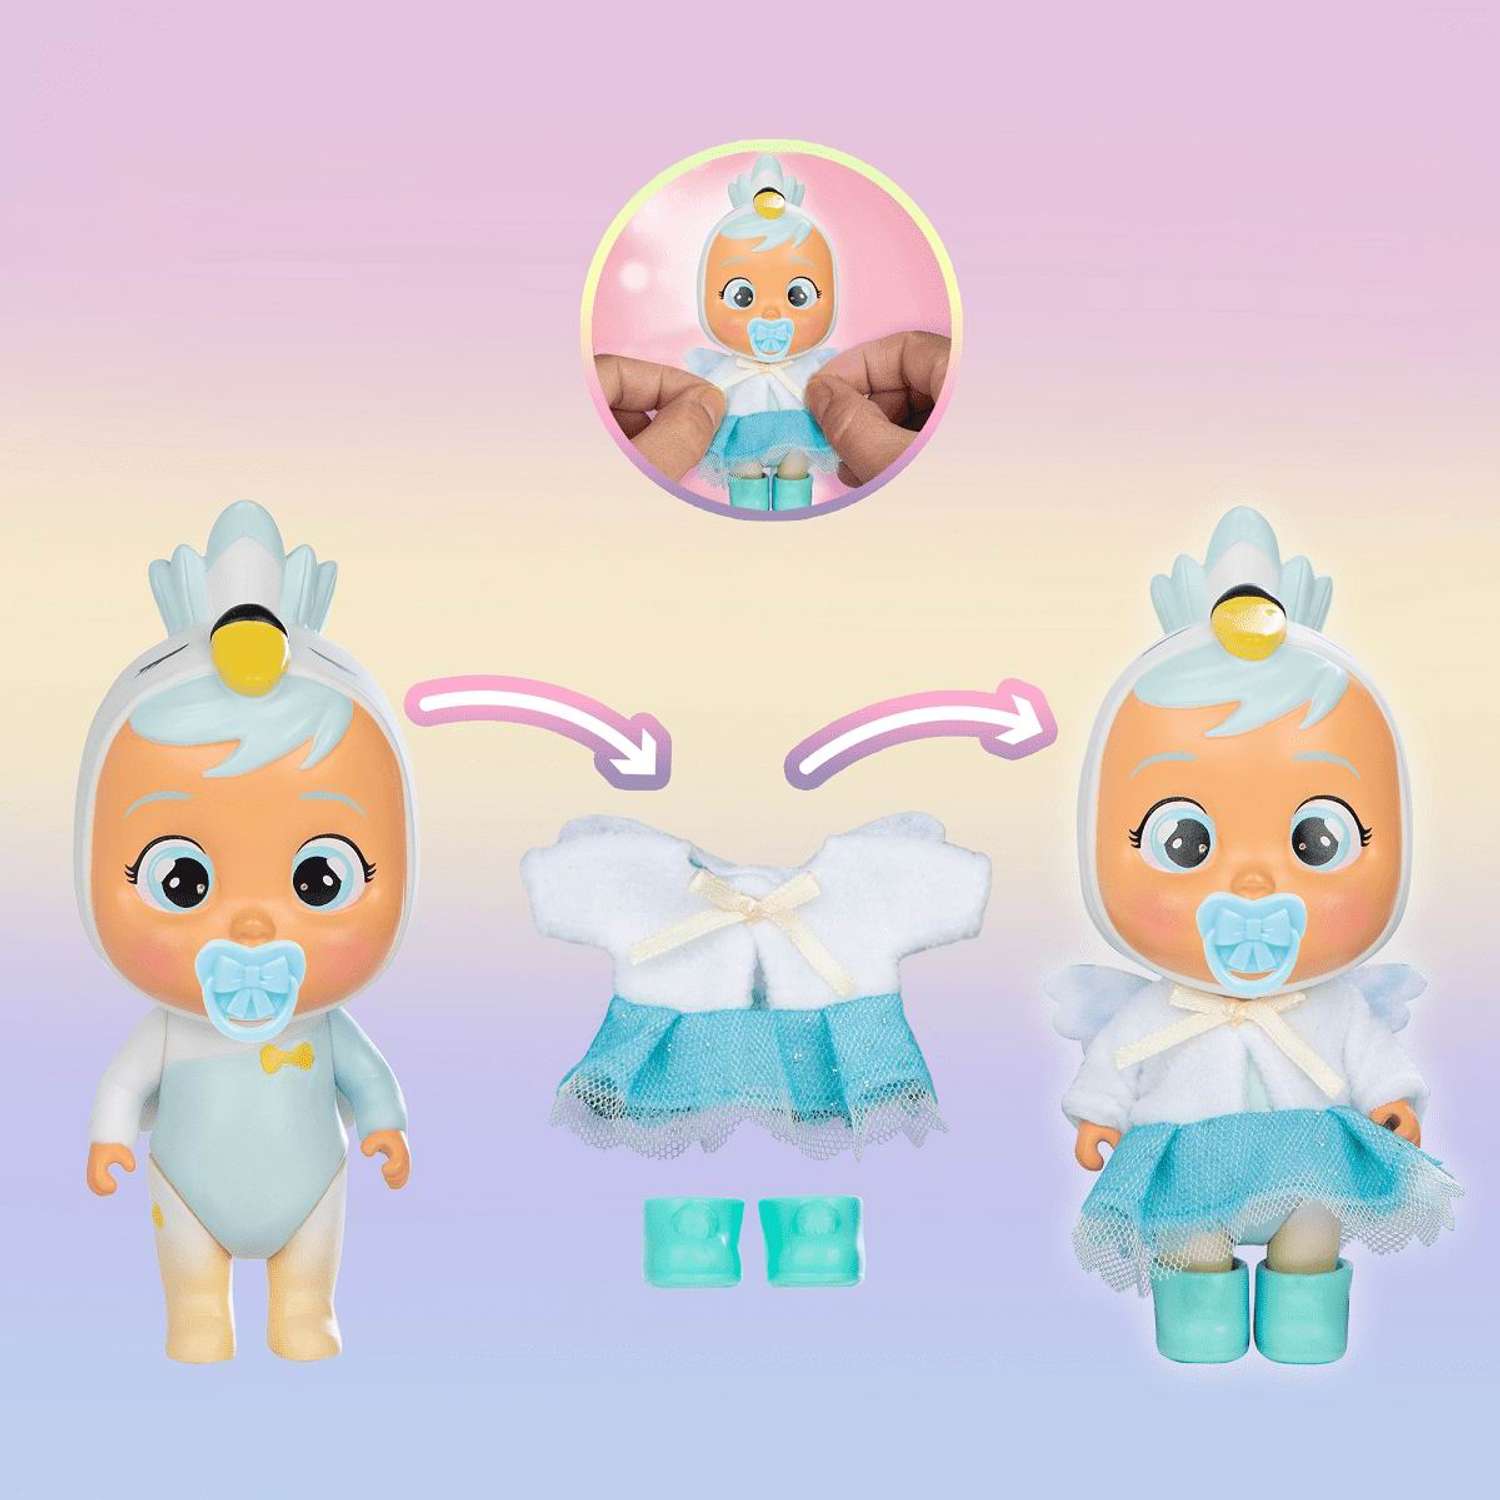 Кукла Cry Babies Magic Tears IMC Toys Плачущий младенец серия DRESS ME UP в комплекте с домиком и аксессуарами 81970 - фото 7